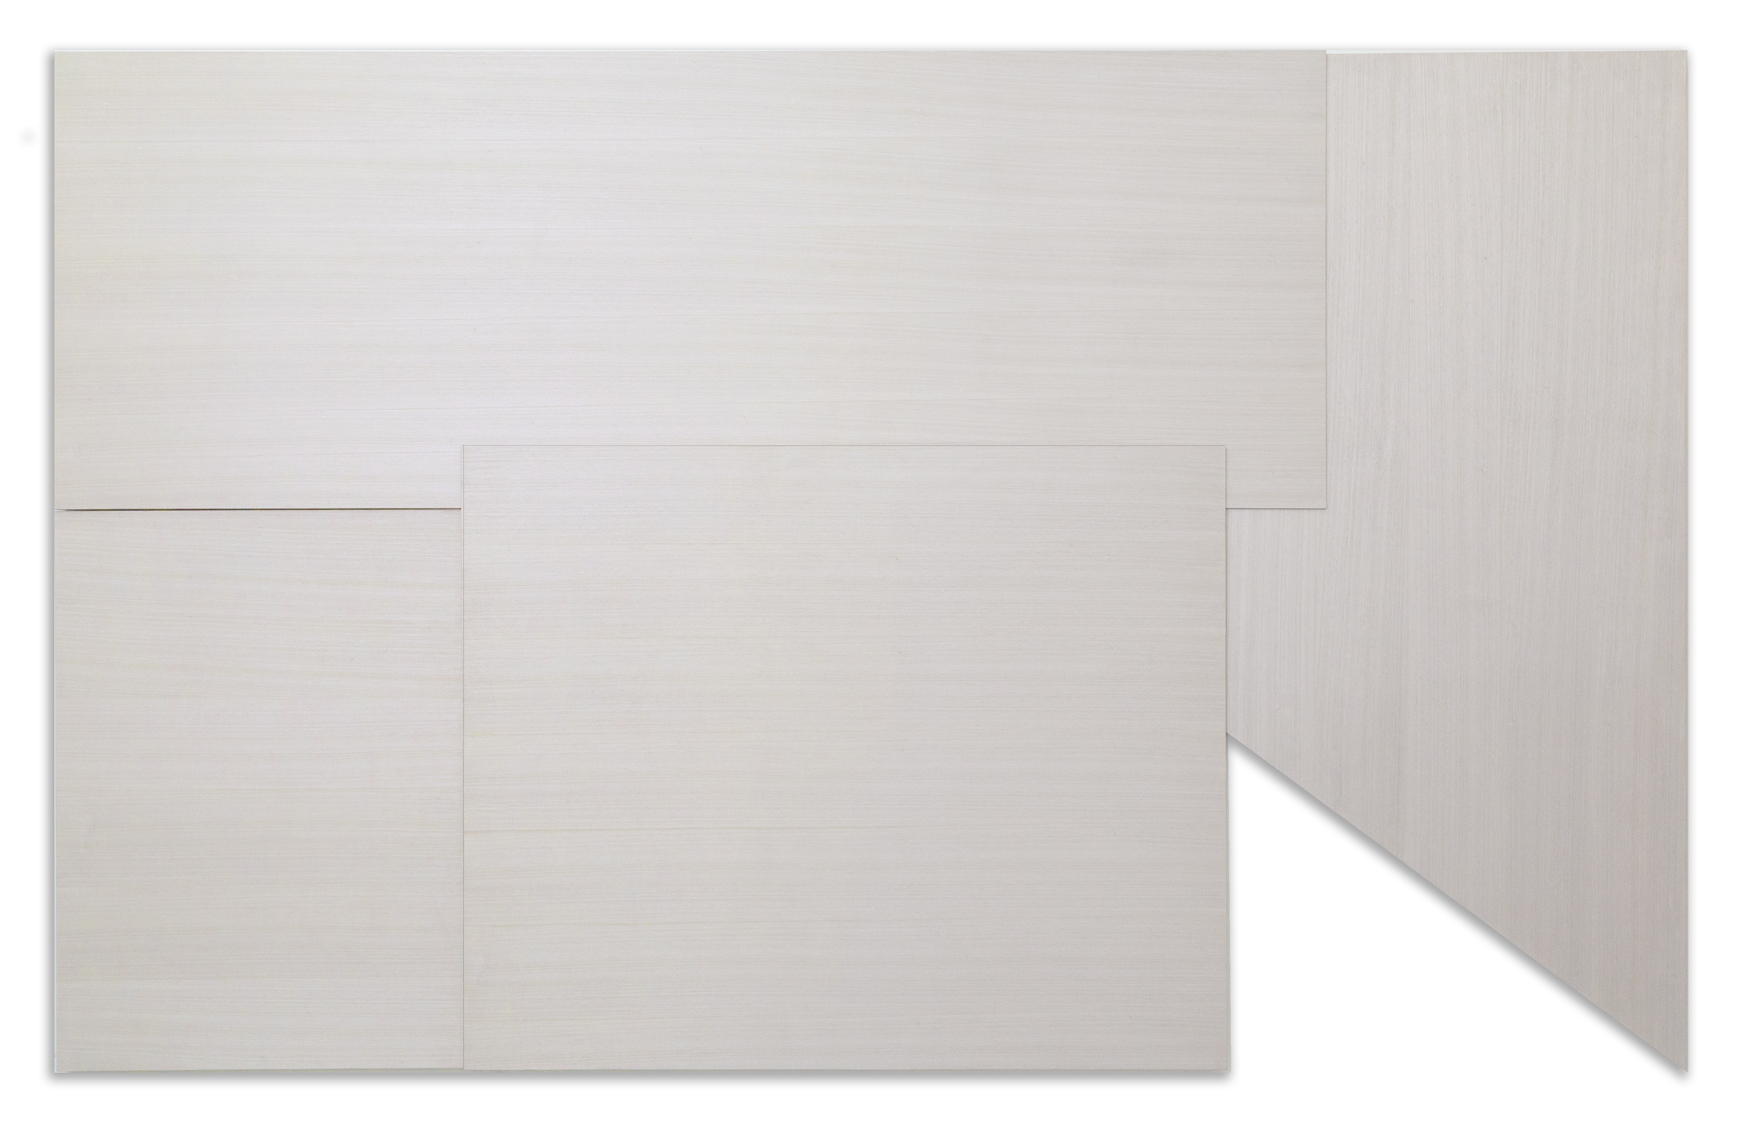  White Deconstruction I, 2018  Egyptian Wood Laminate on Wood and Aluminum   79” x 126”    Deconstrucción Blanca l, 2018  Chapa de madera egipcia s/mdf montada   200 x 320 cm 